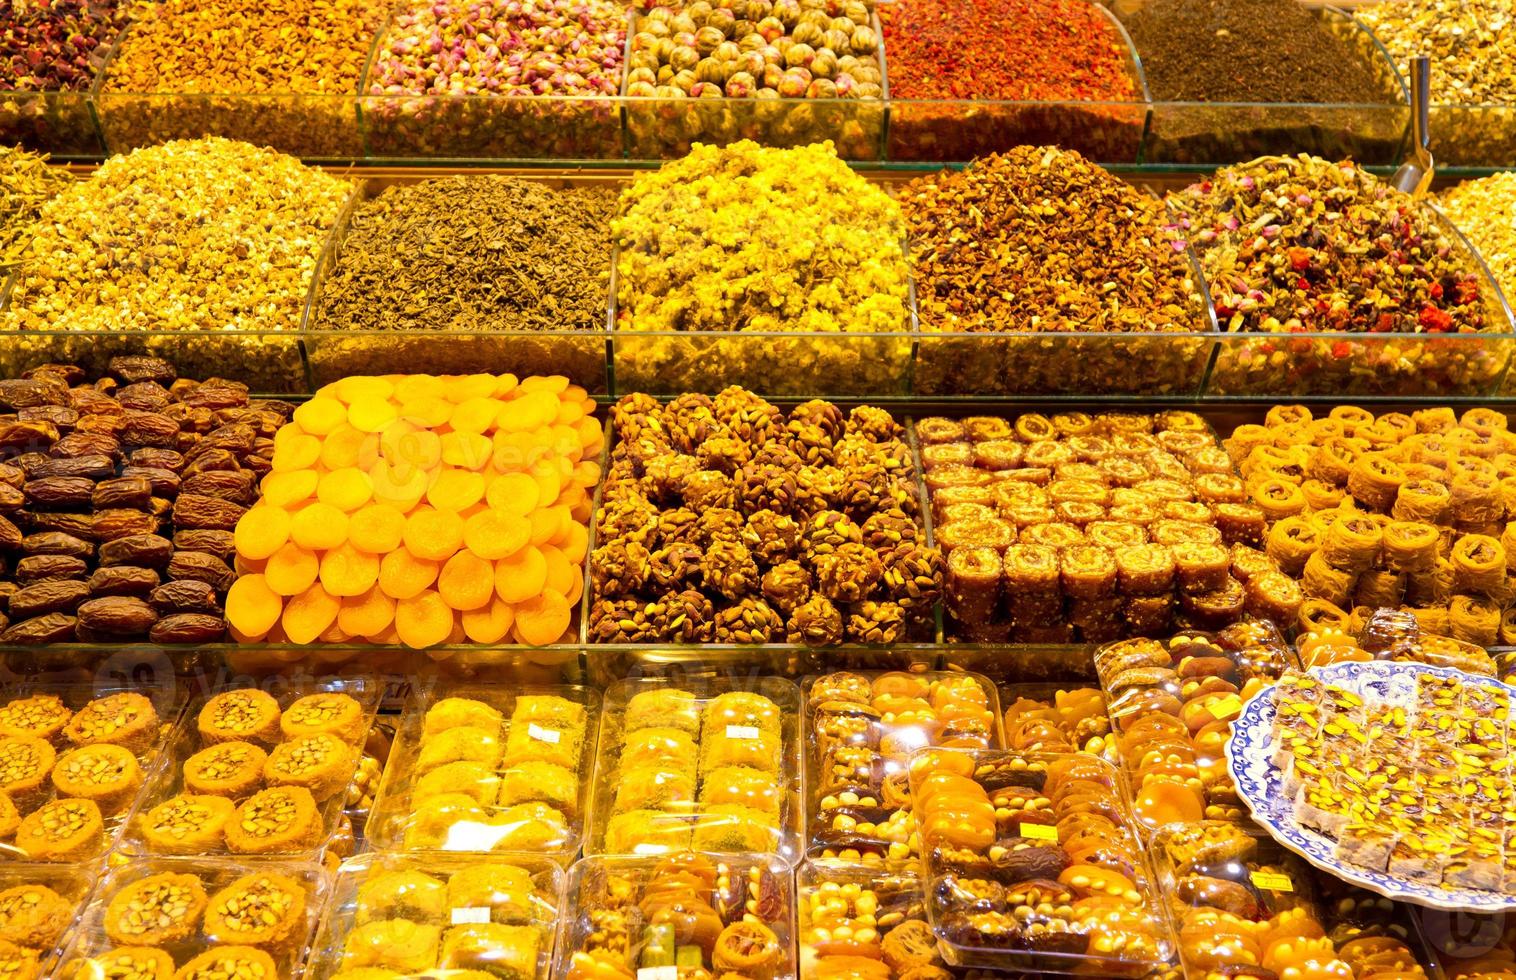 doces e chás turcos do bazar de especiarias, istambul foto